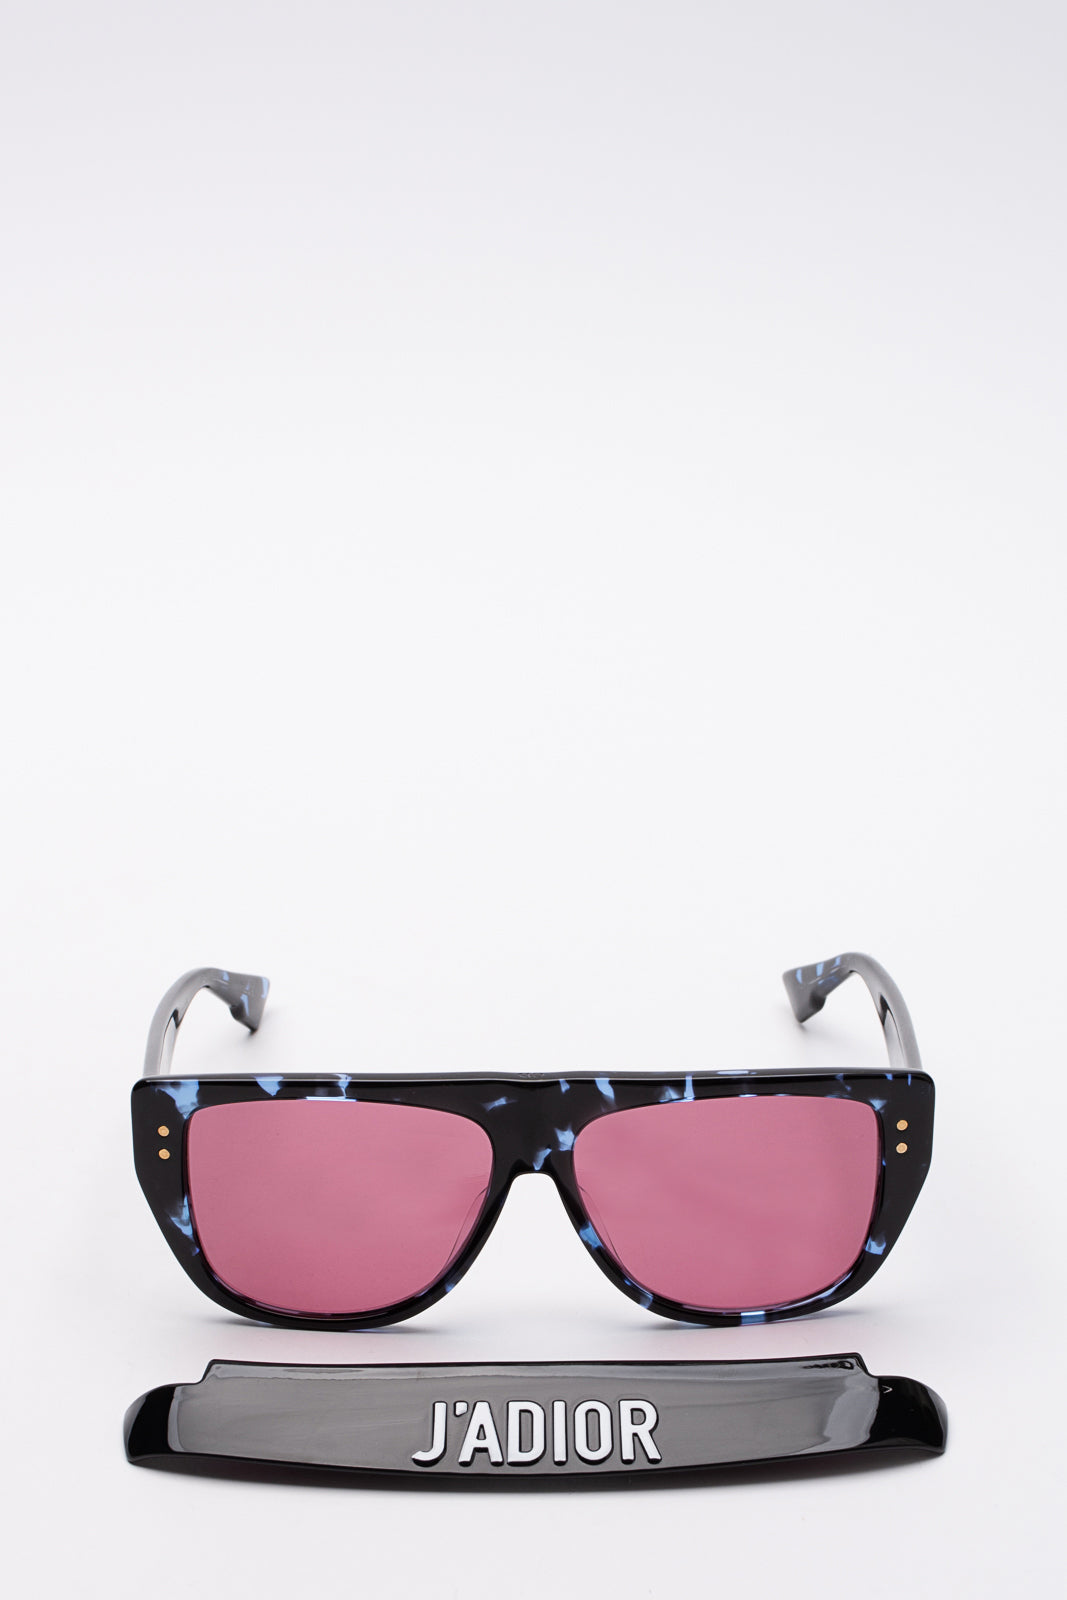 RRP€400 DIOR DIORCLUB2 Flat Top Sunglasses Detachable Visor 'J'ADIOR' Pink Lens gallery main photo